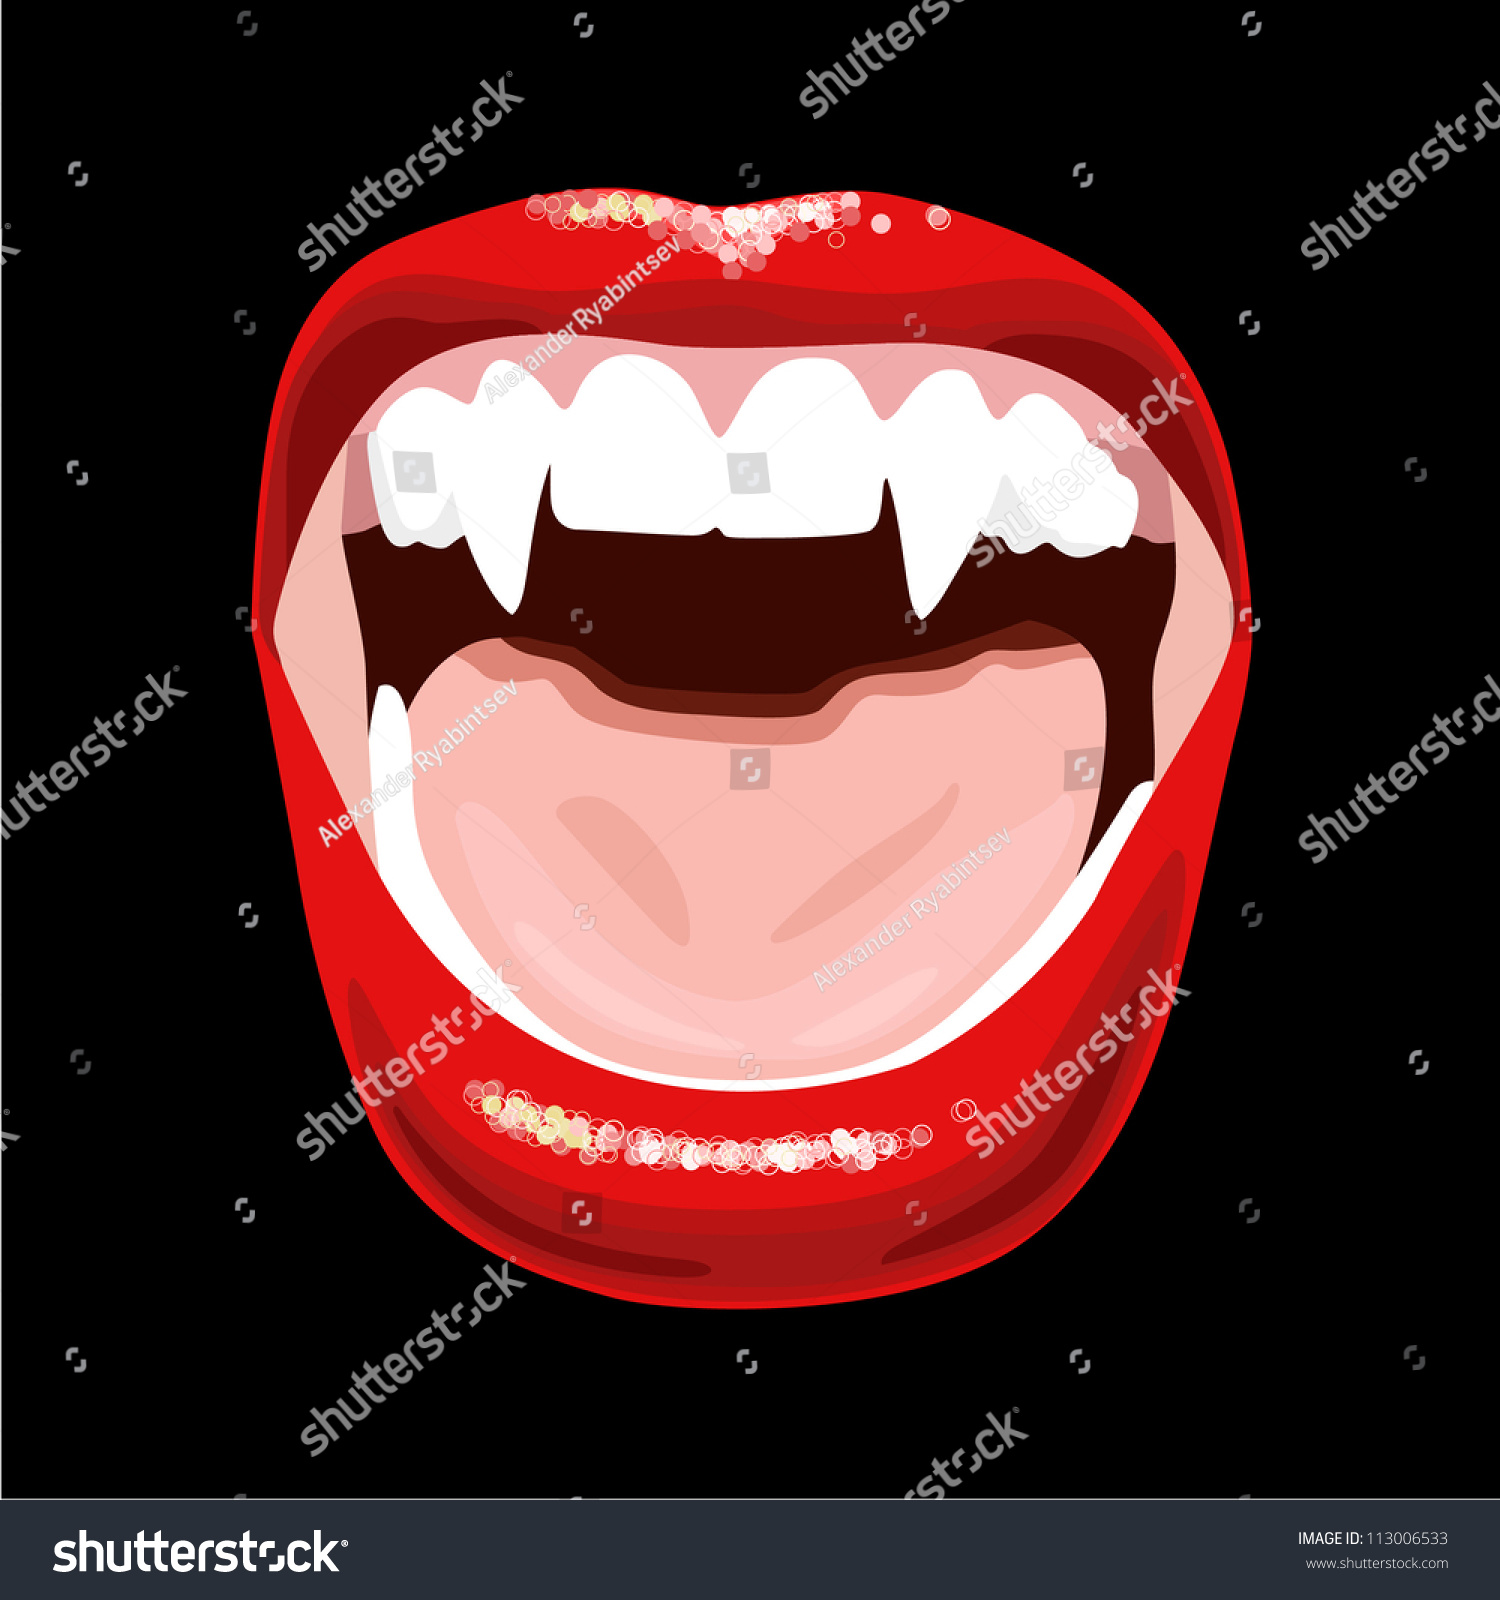 Vampire Mouth Stock Vector Illustration 113006533 : Shutterstock